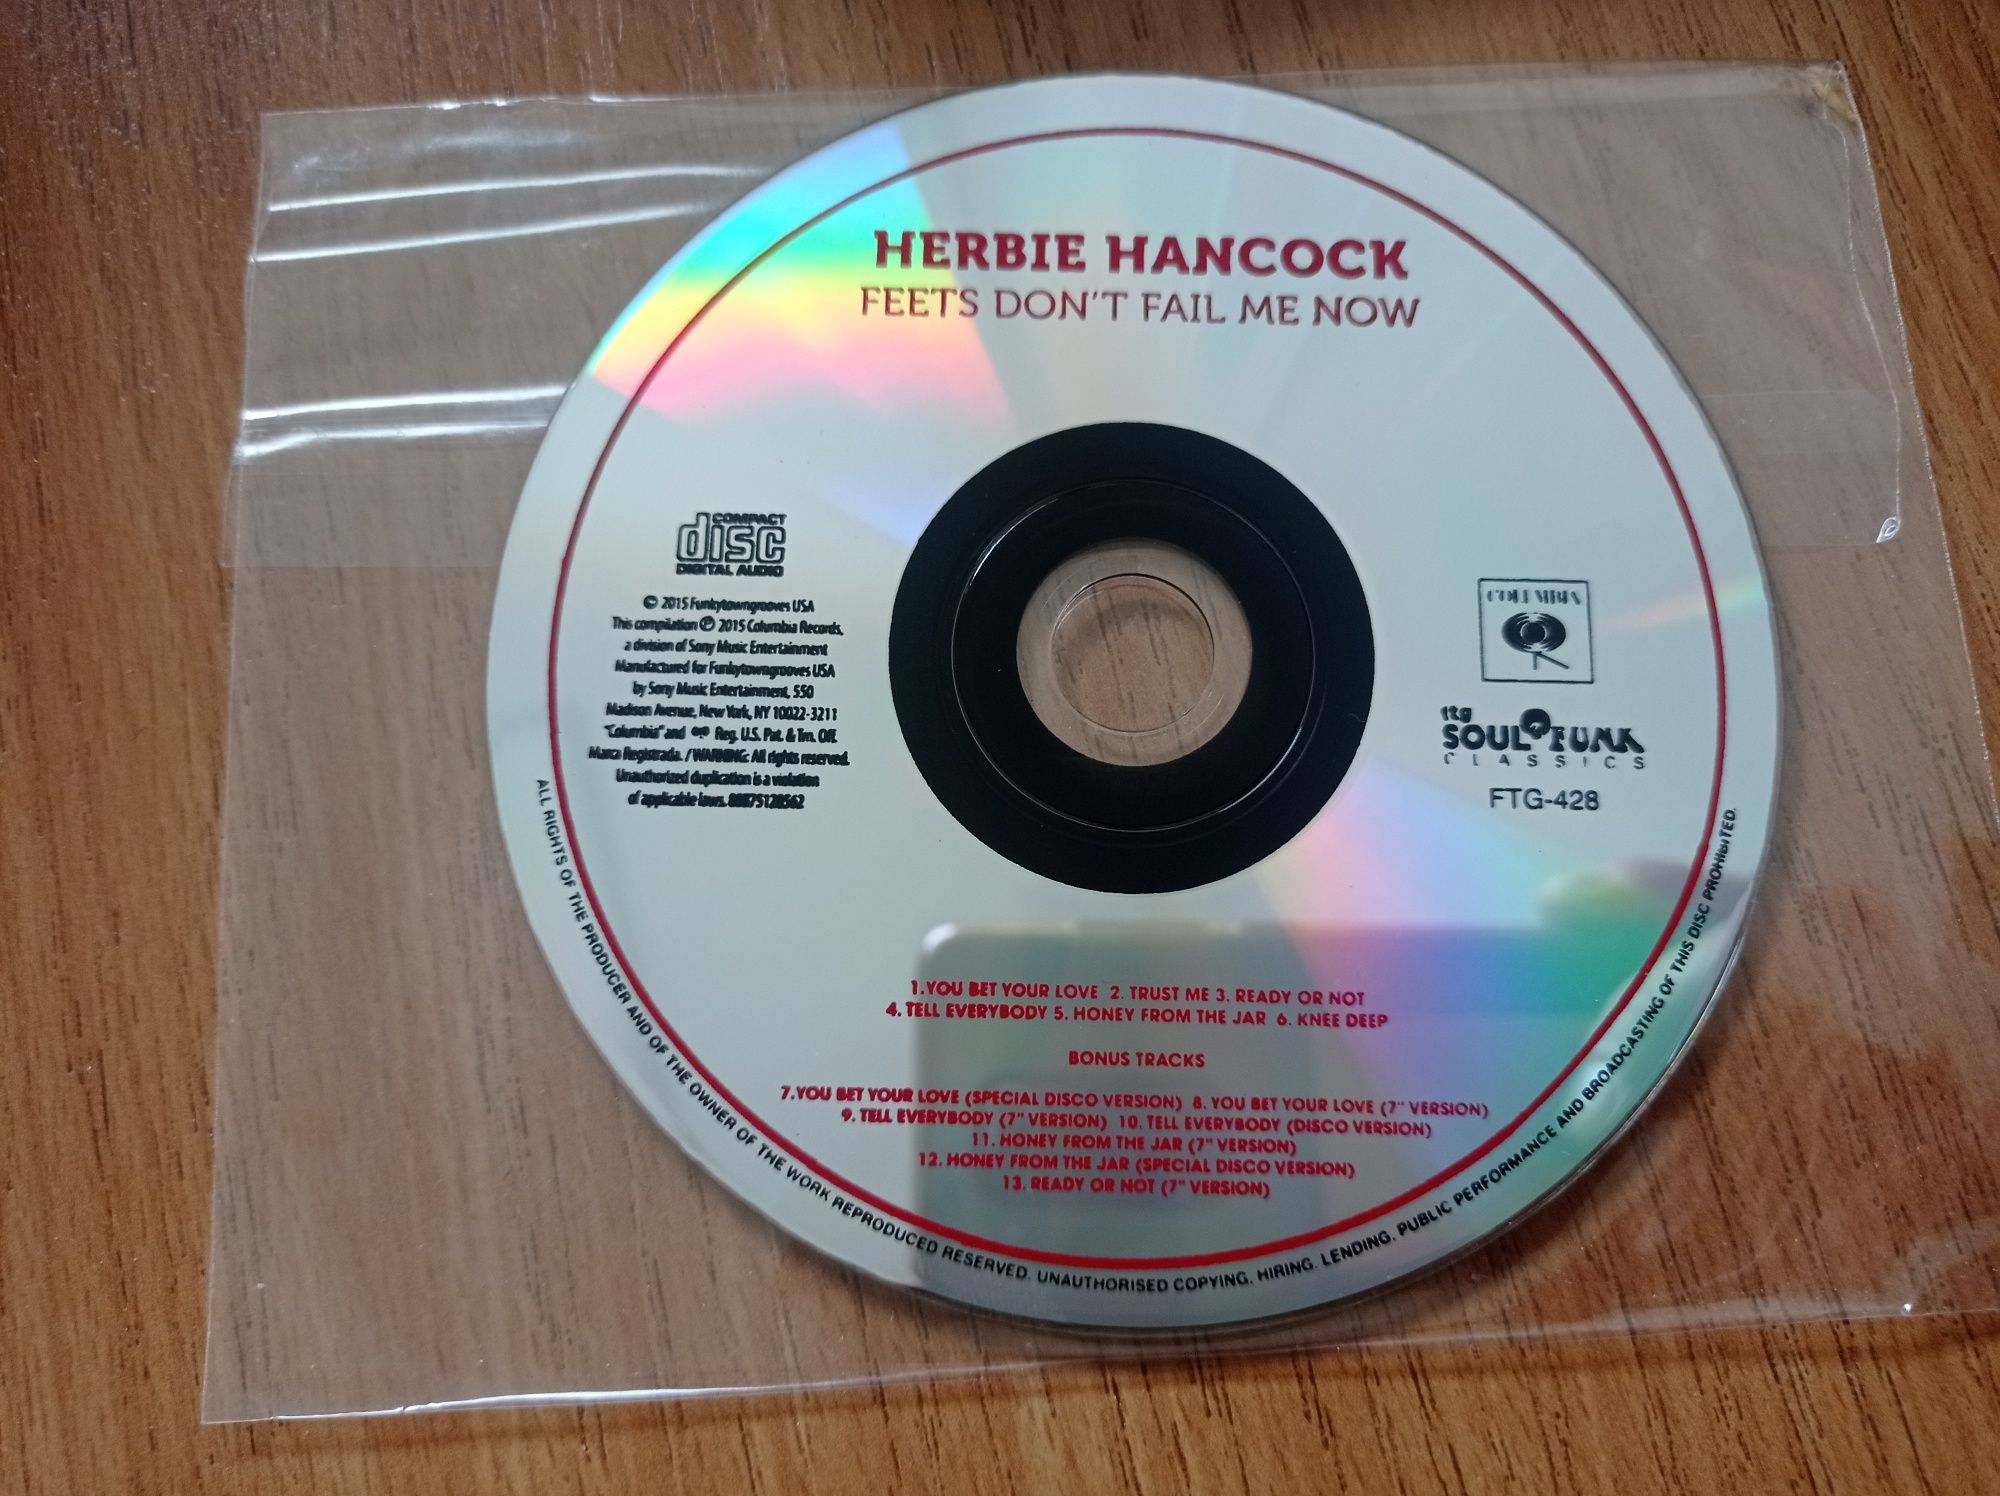 Herbie Hancock - Feets don't fail me now